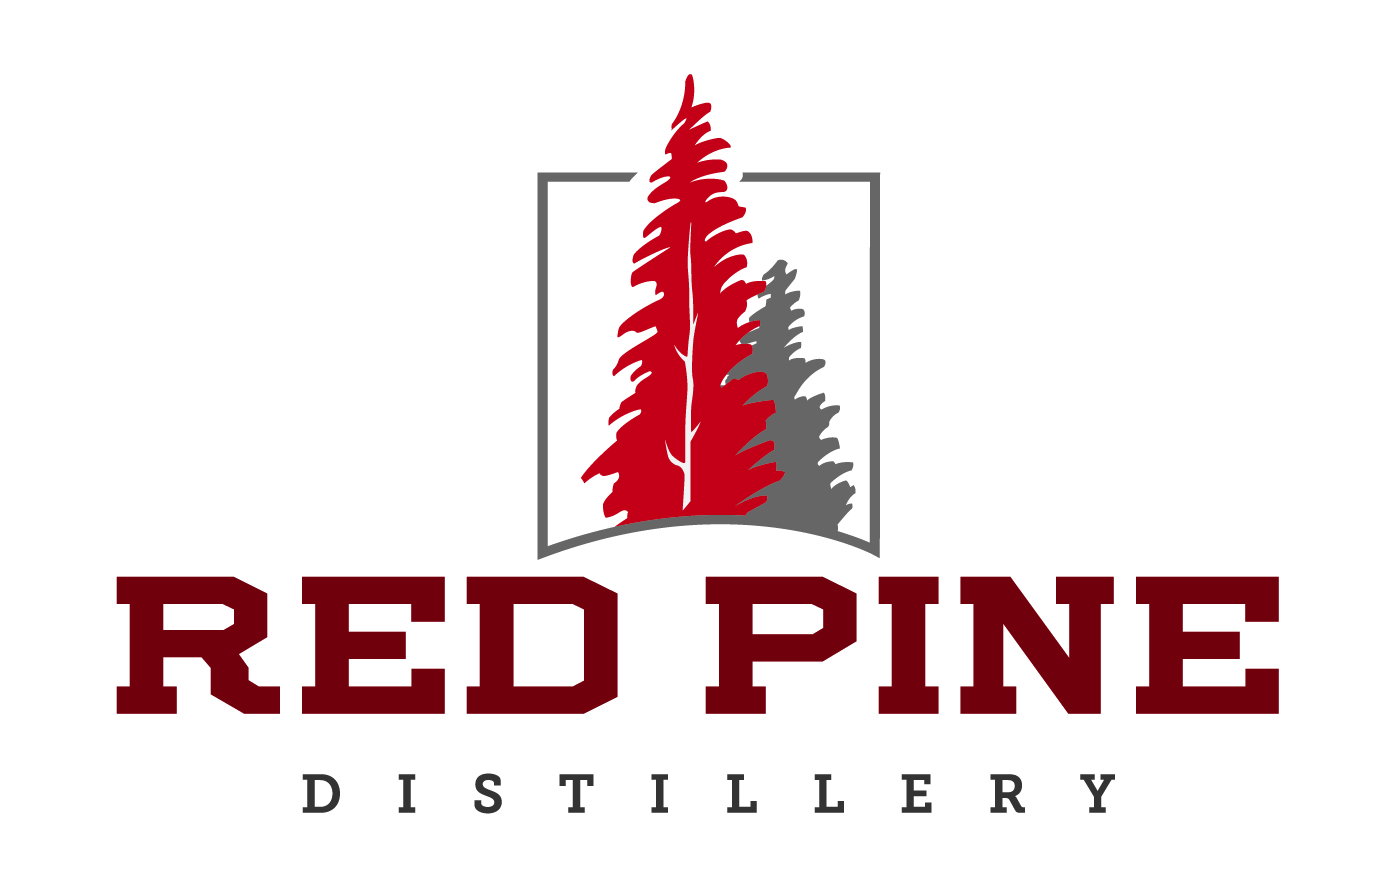 Red Pine Distillery